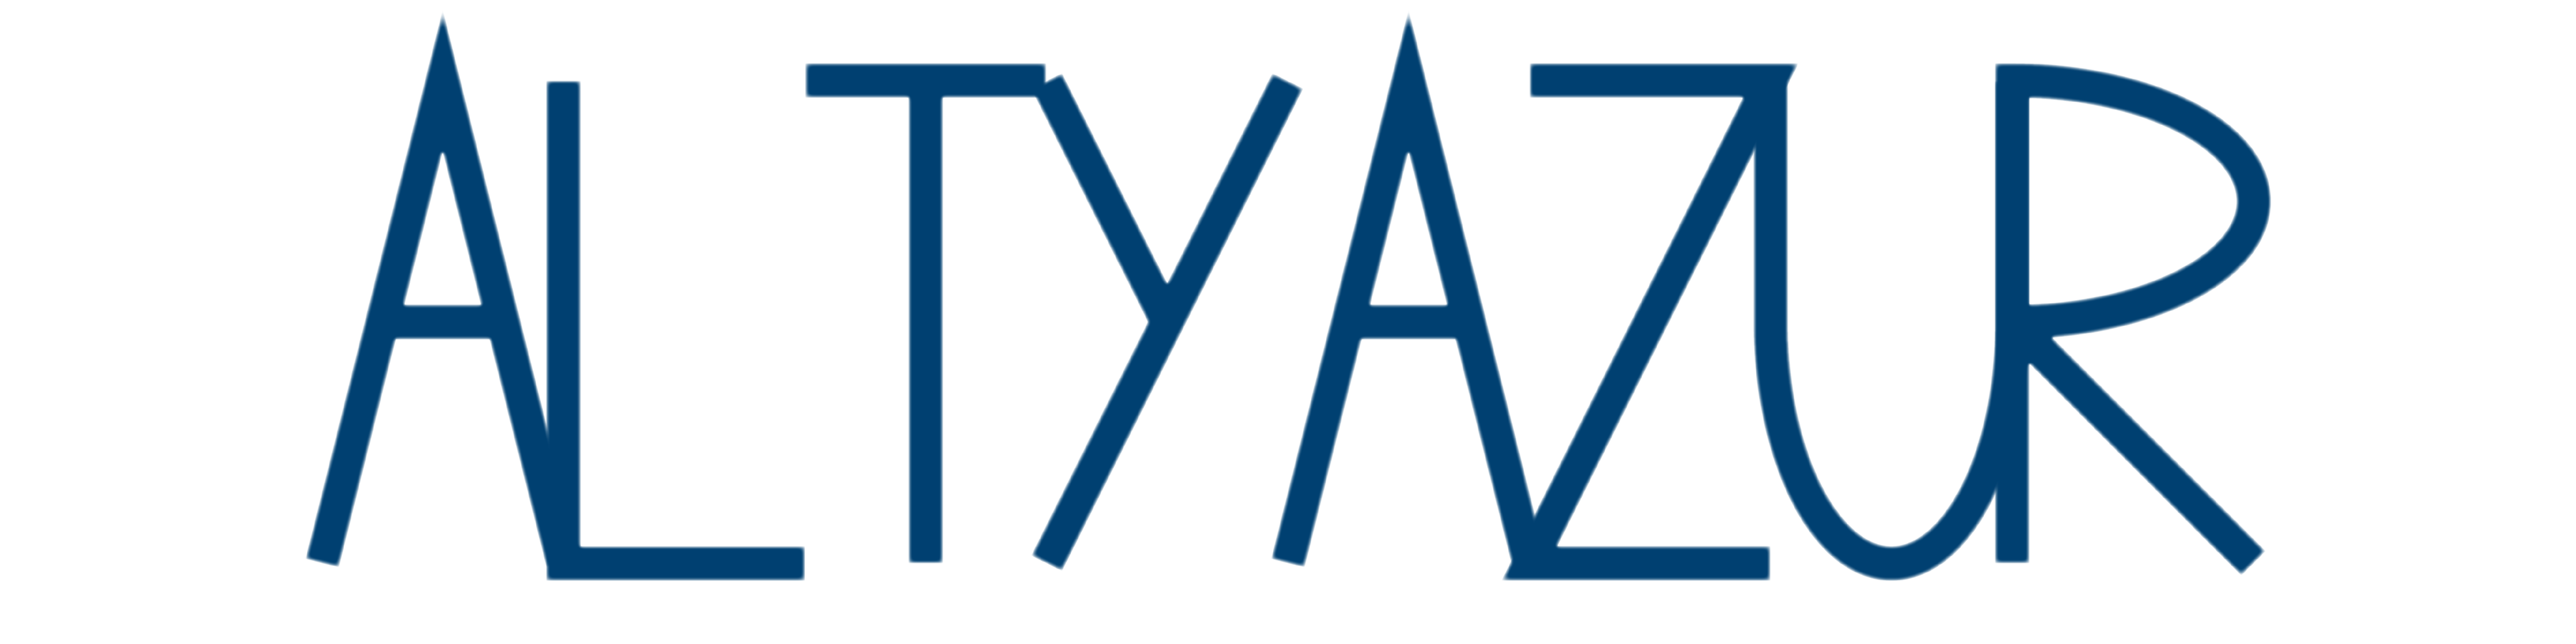 Altyazur logo